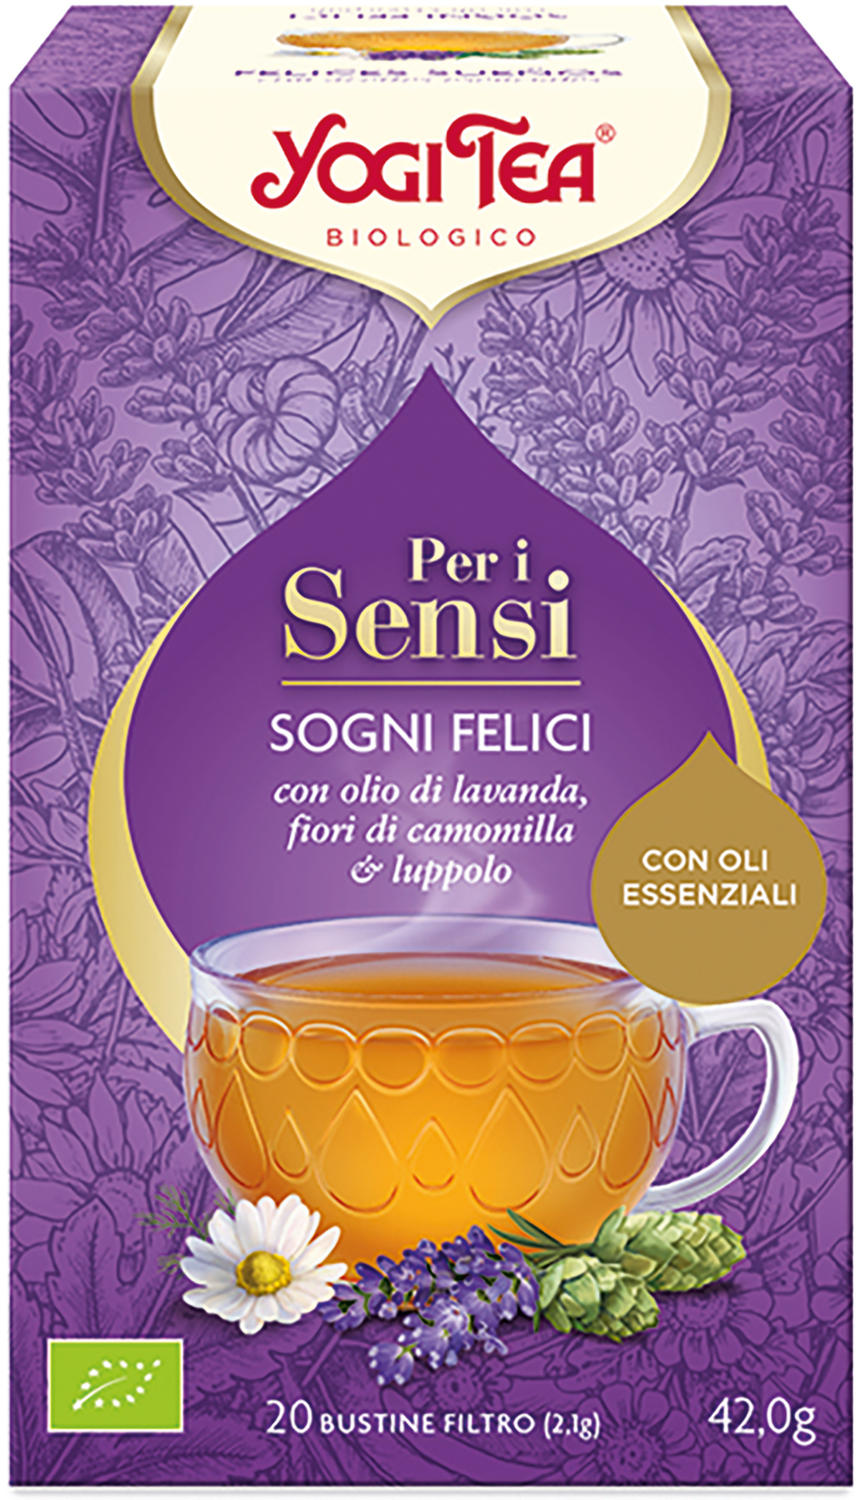 Image of Per i Sensi - SOGNI FELICI Yogi Tea(R) 40g